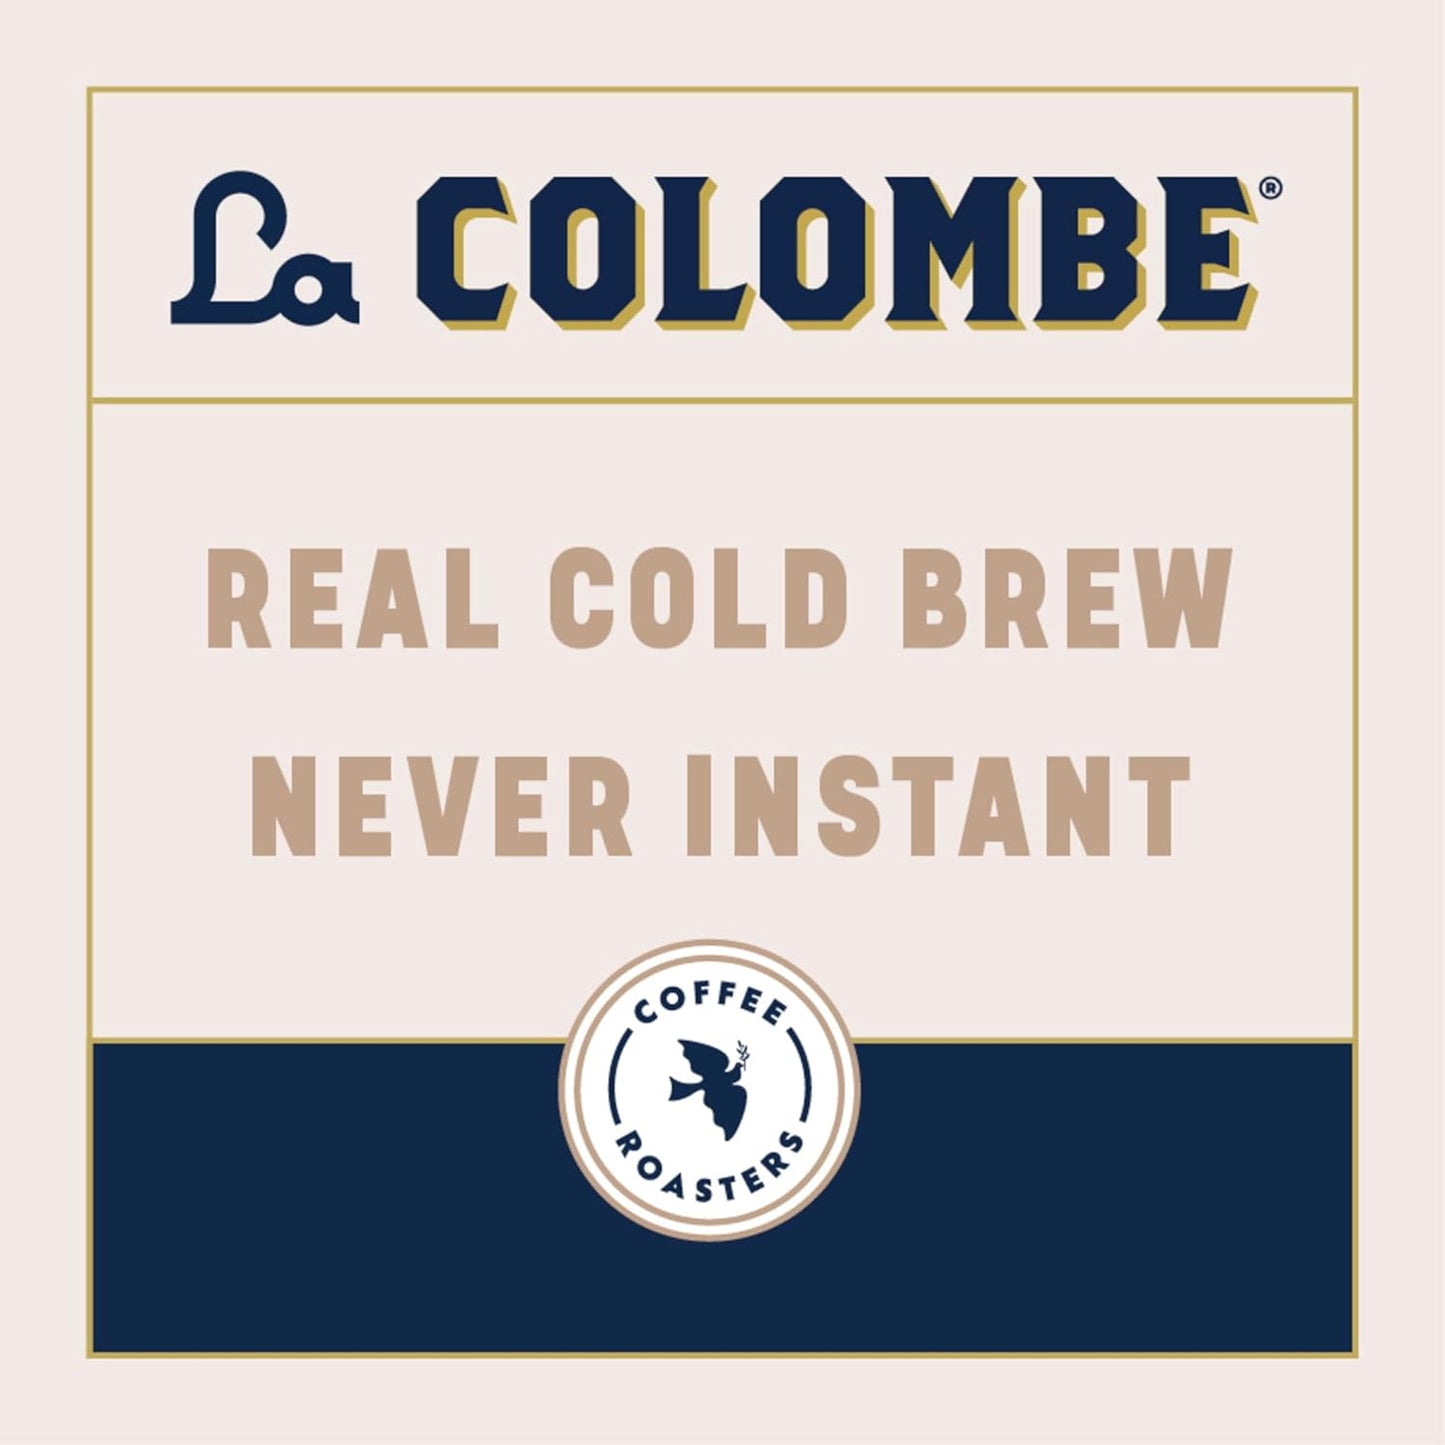 La Colombe Double Draft Latte| 9 Fl. Oz. 4 Pack - 100% Arabica Brazilian Cold Brew Coffee| Dairy-Free Vegan Latte, 120mg Natural Caffeine